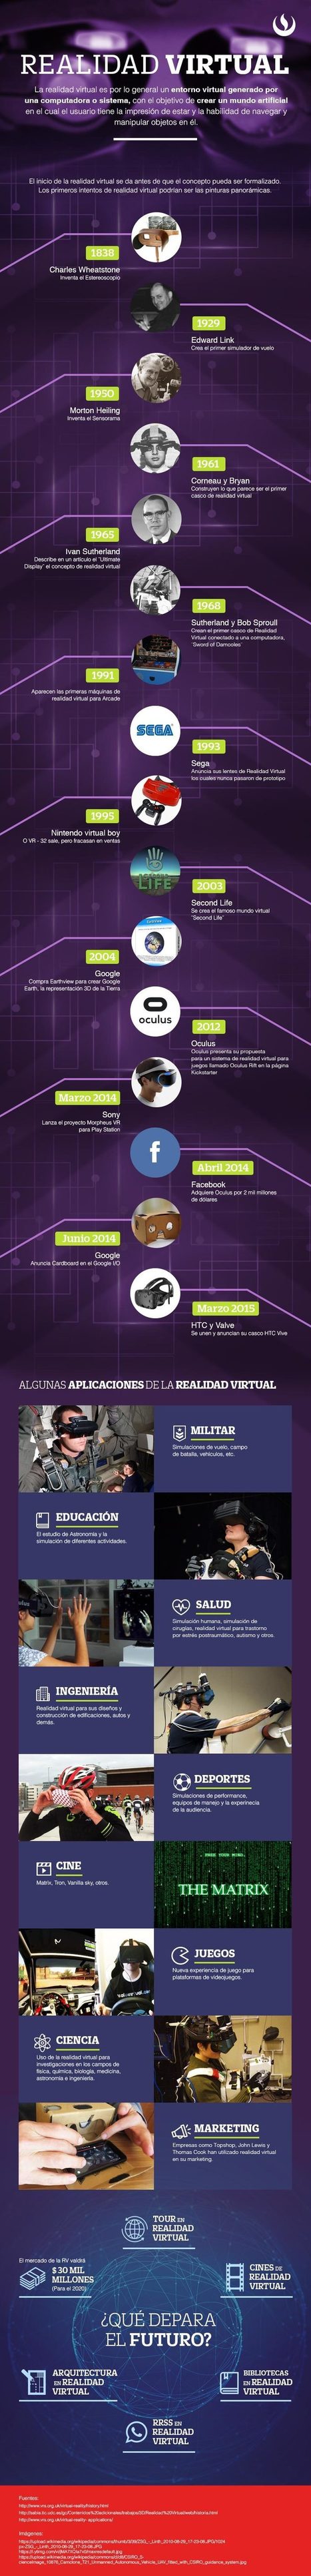 La Realidad virtual en infografia | Information Technology & Social Media News | Scoop.it